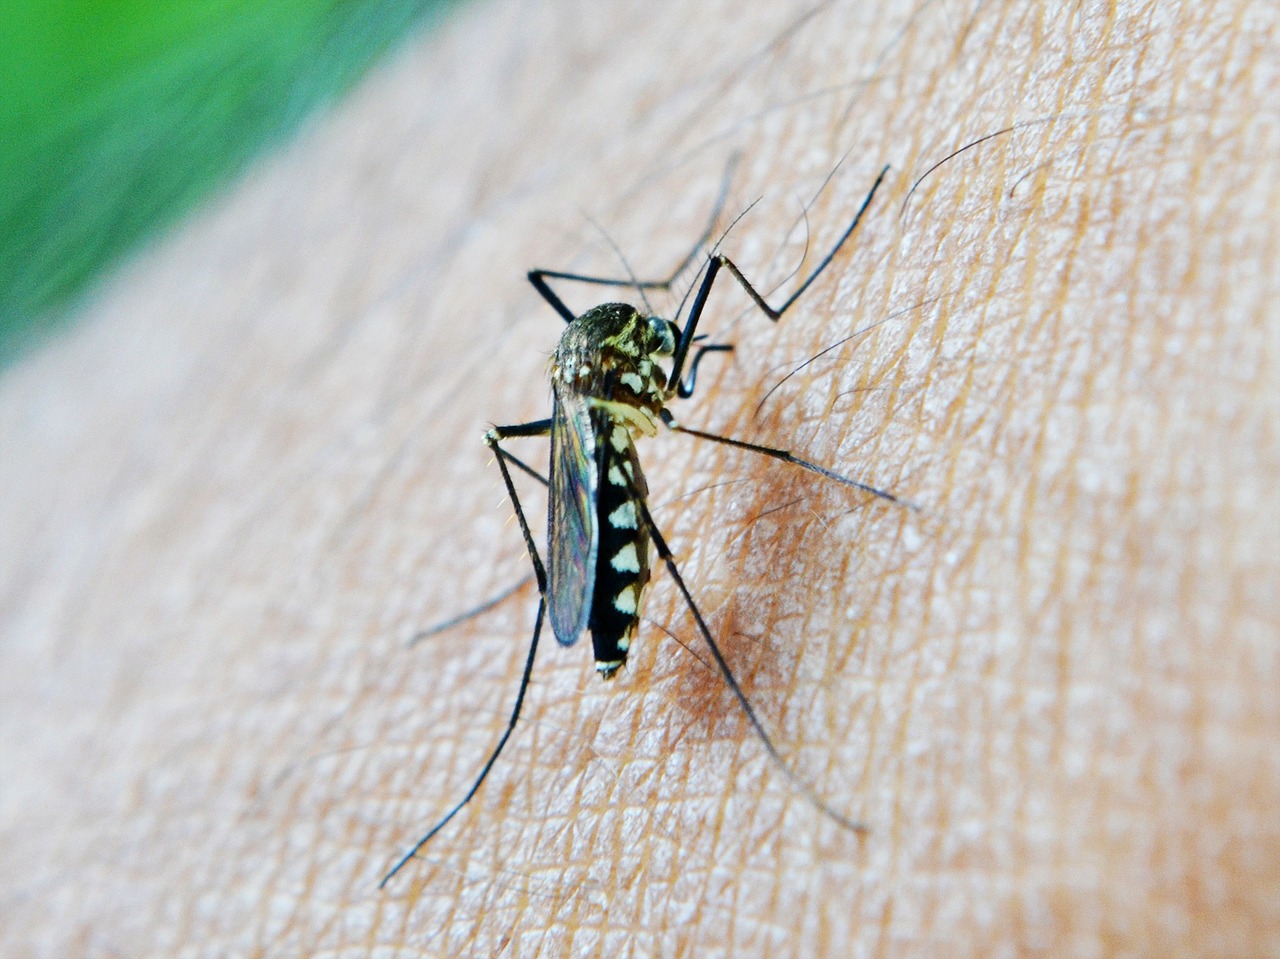 Malaria mosquito bite